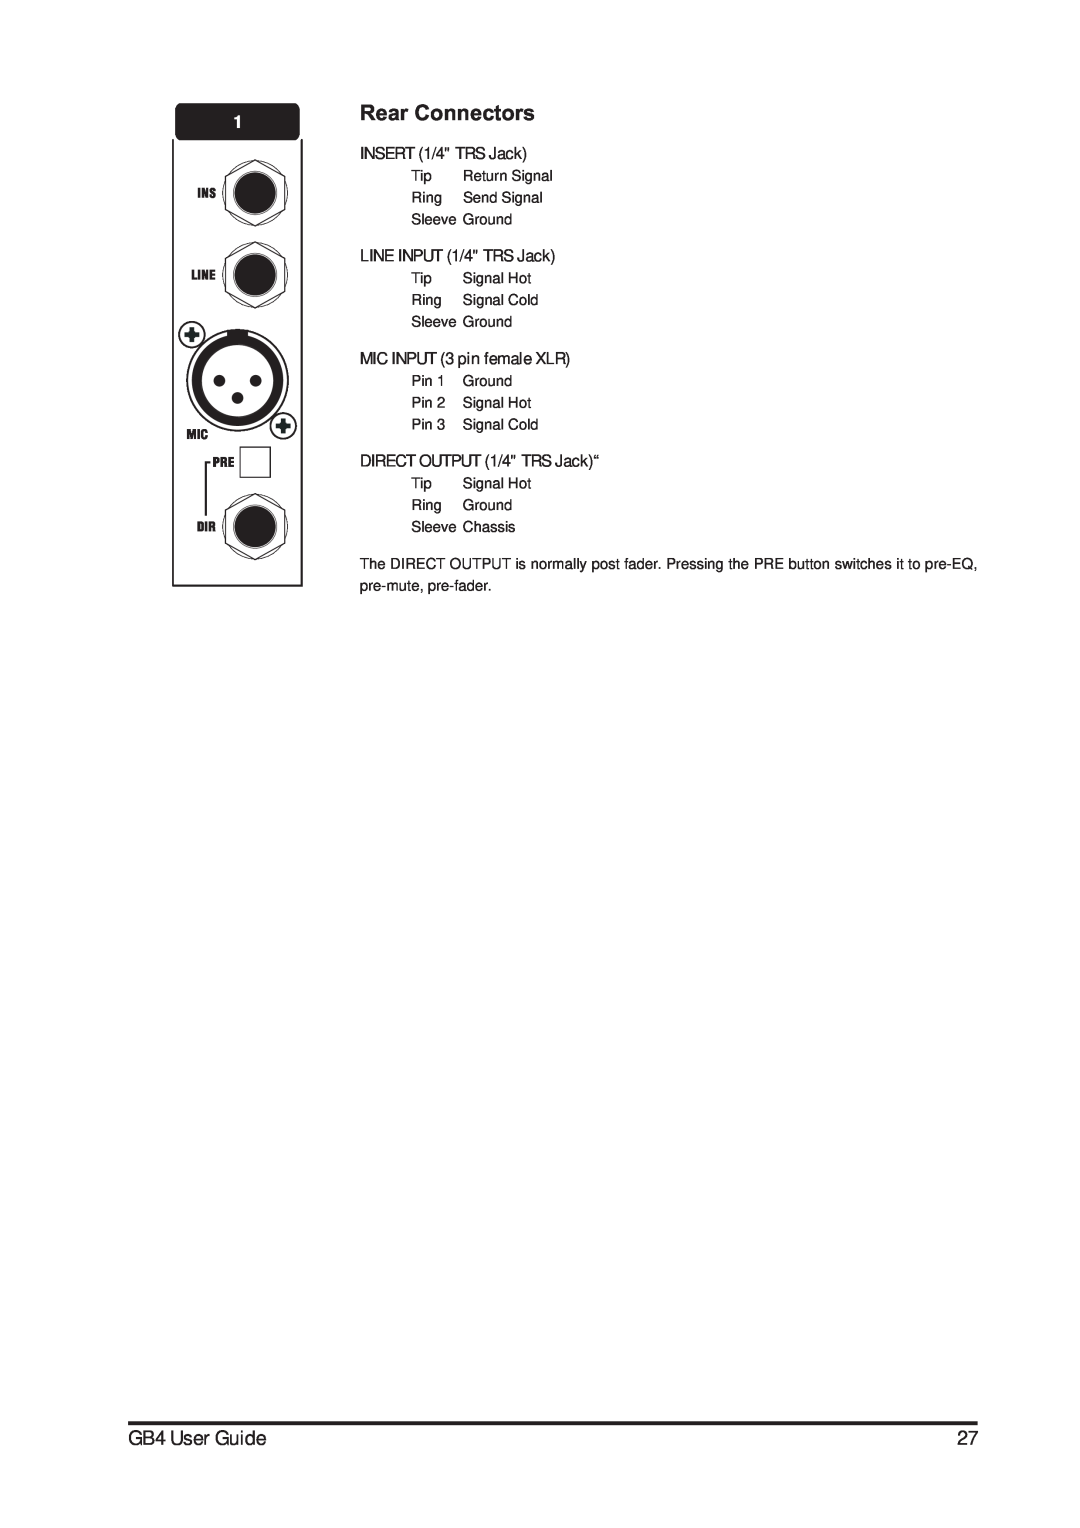 Harman-Kardon manual Rear Connectors, GB4 User Guide, INSERT 1/4 TRS Jack, MIC INPUT 3 pin female XLR 